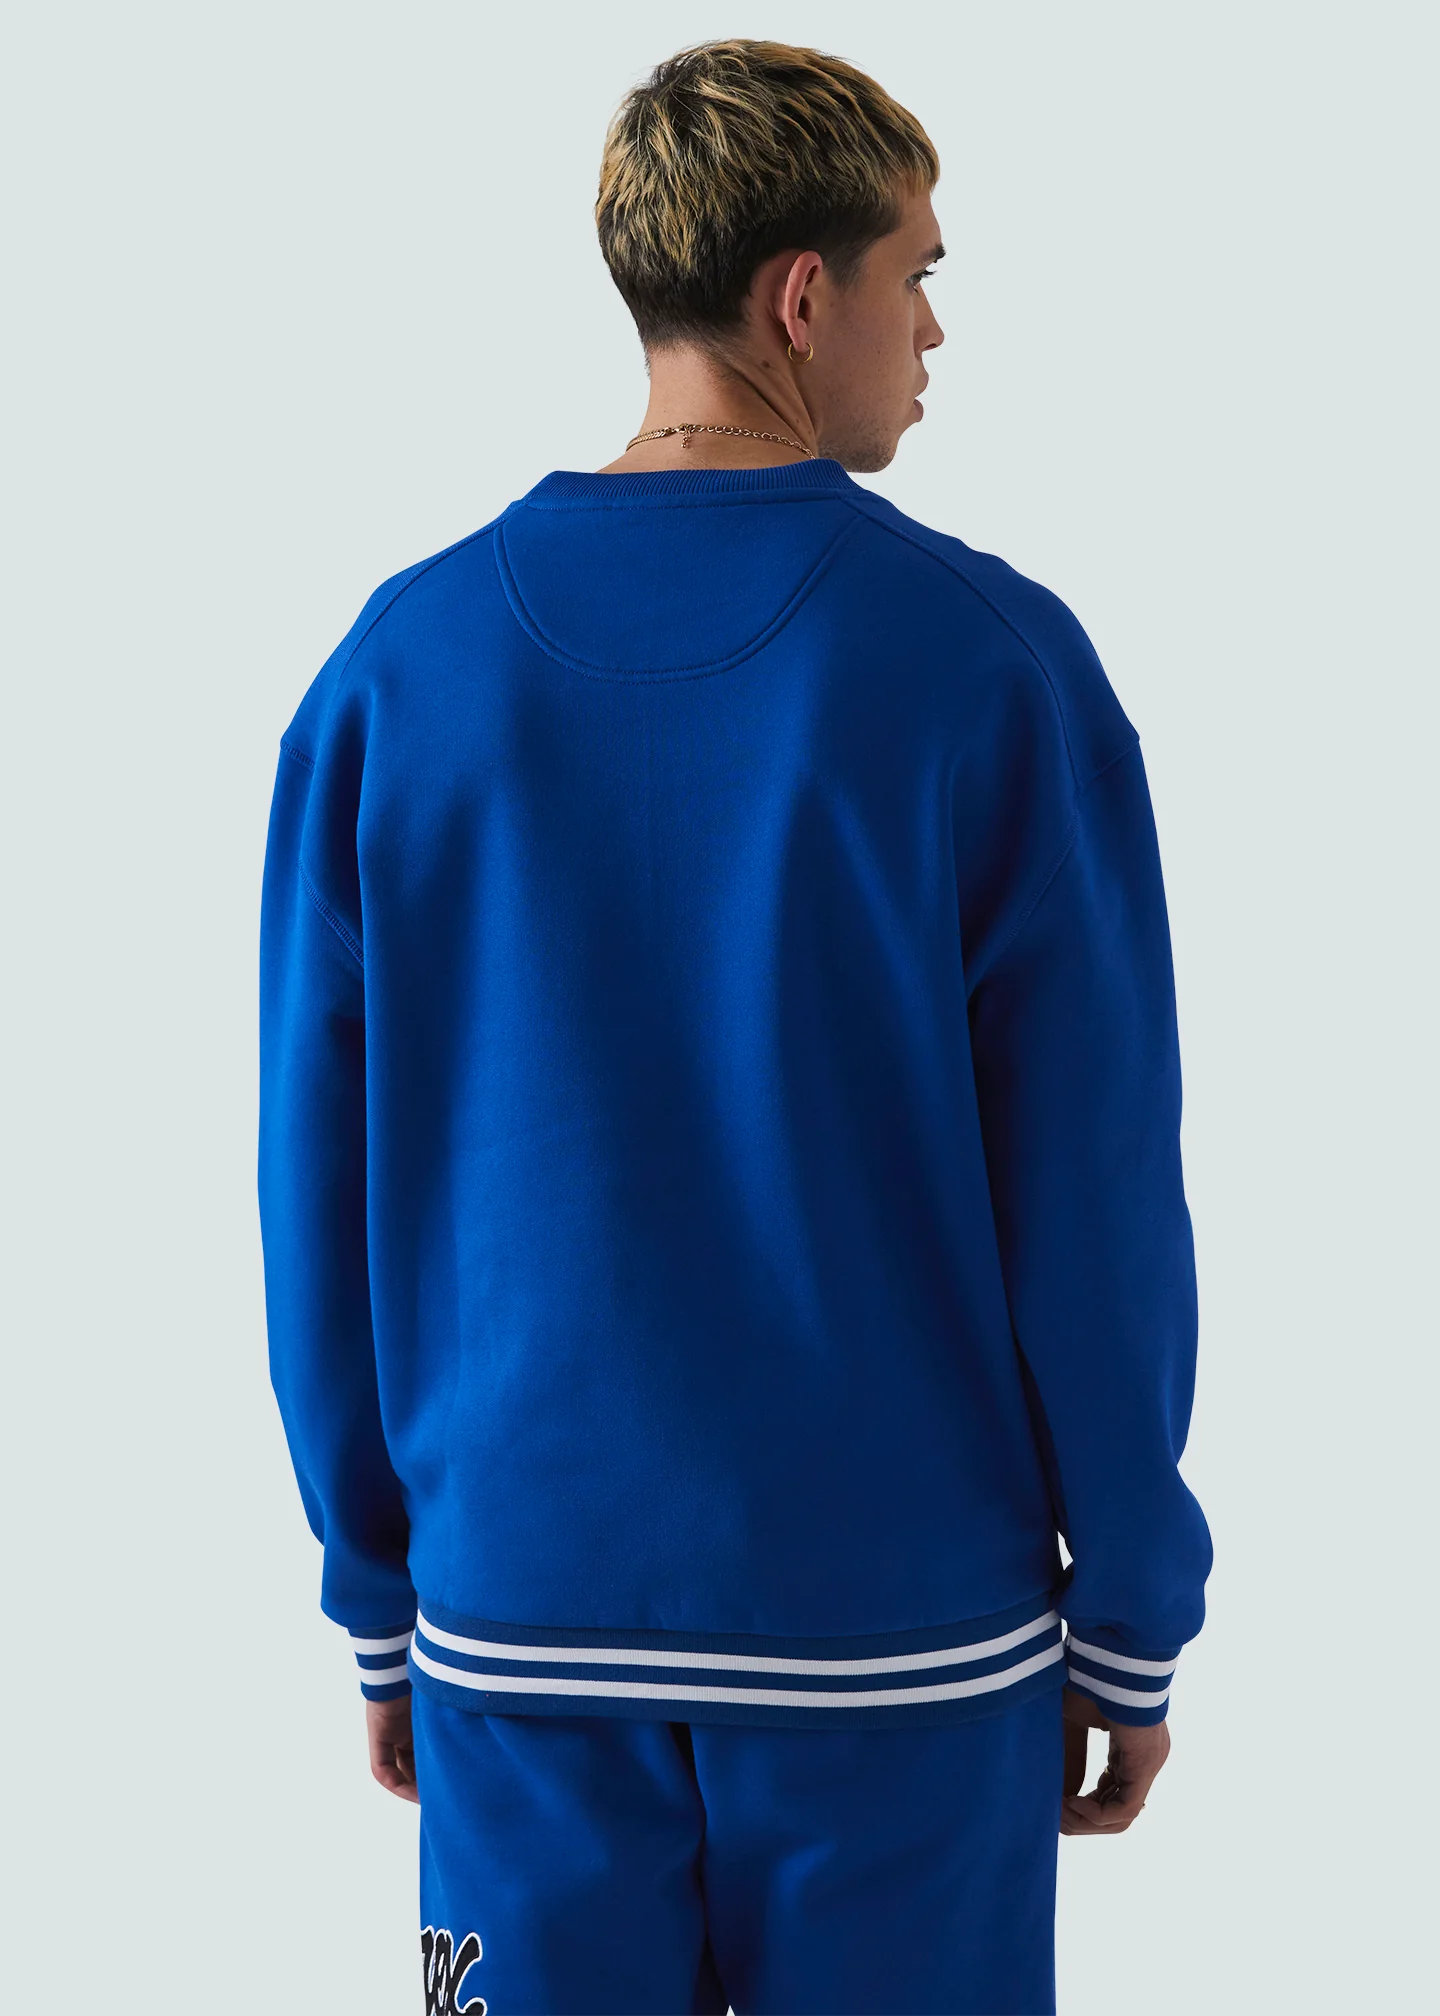 Iconic Avirex Grayling Crewneck Blue Sweatshirt.